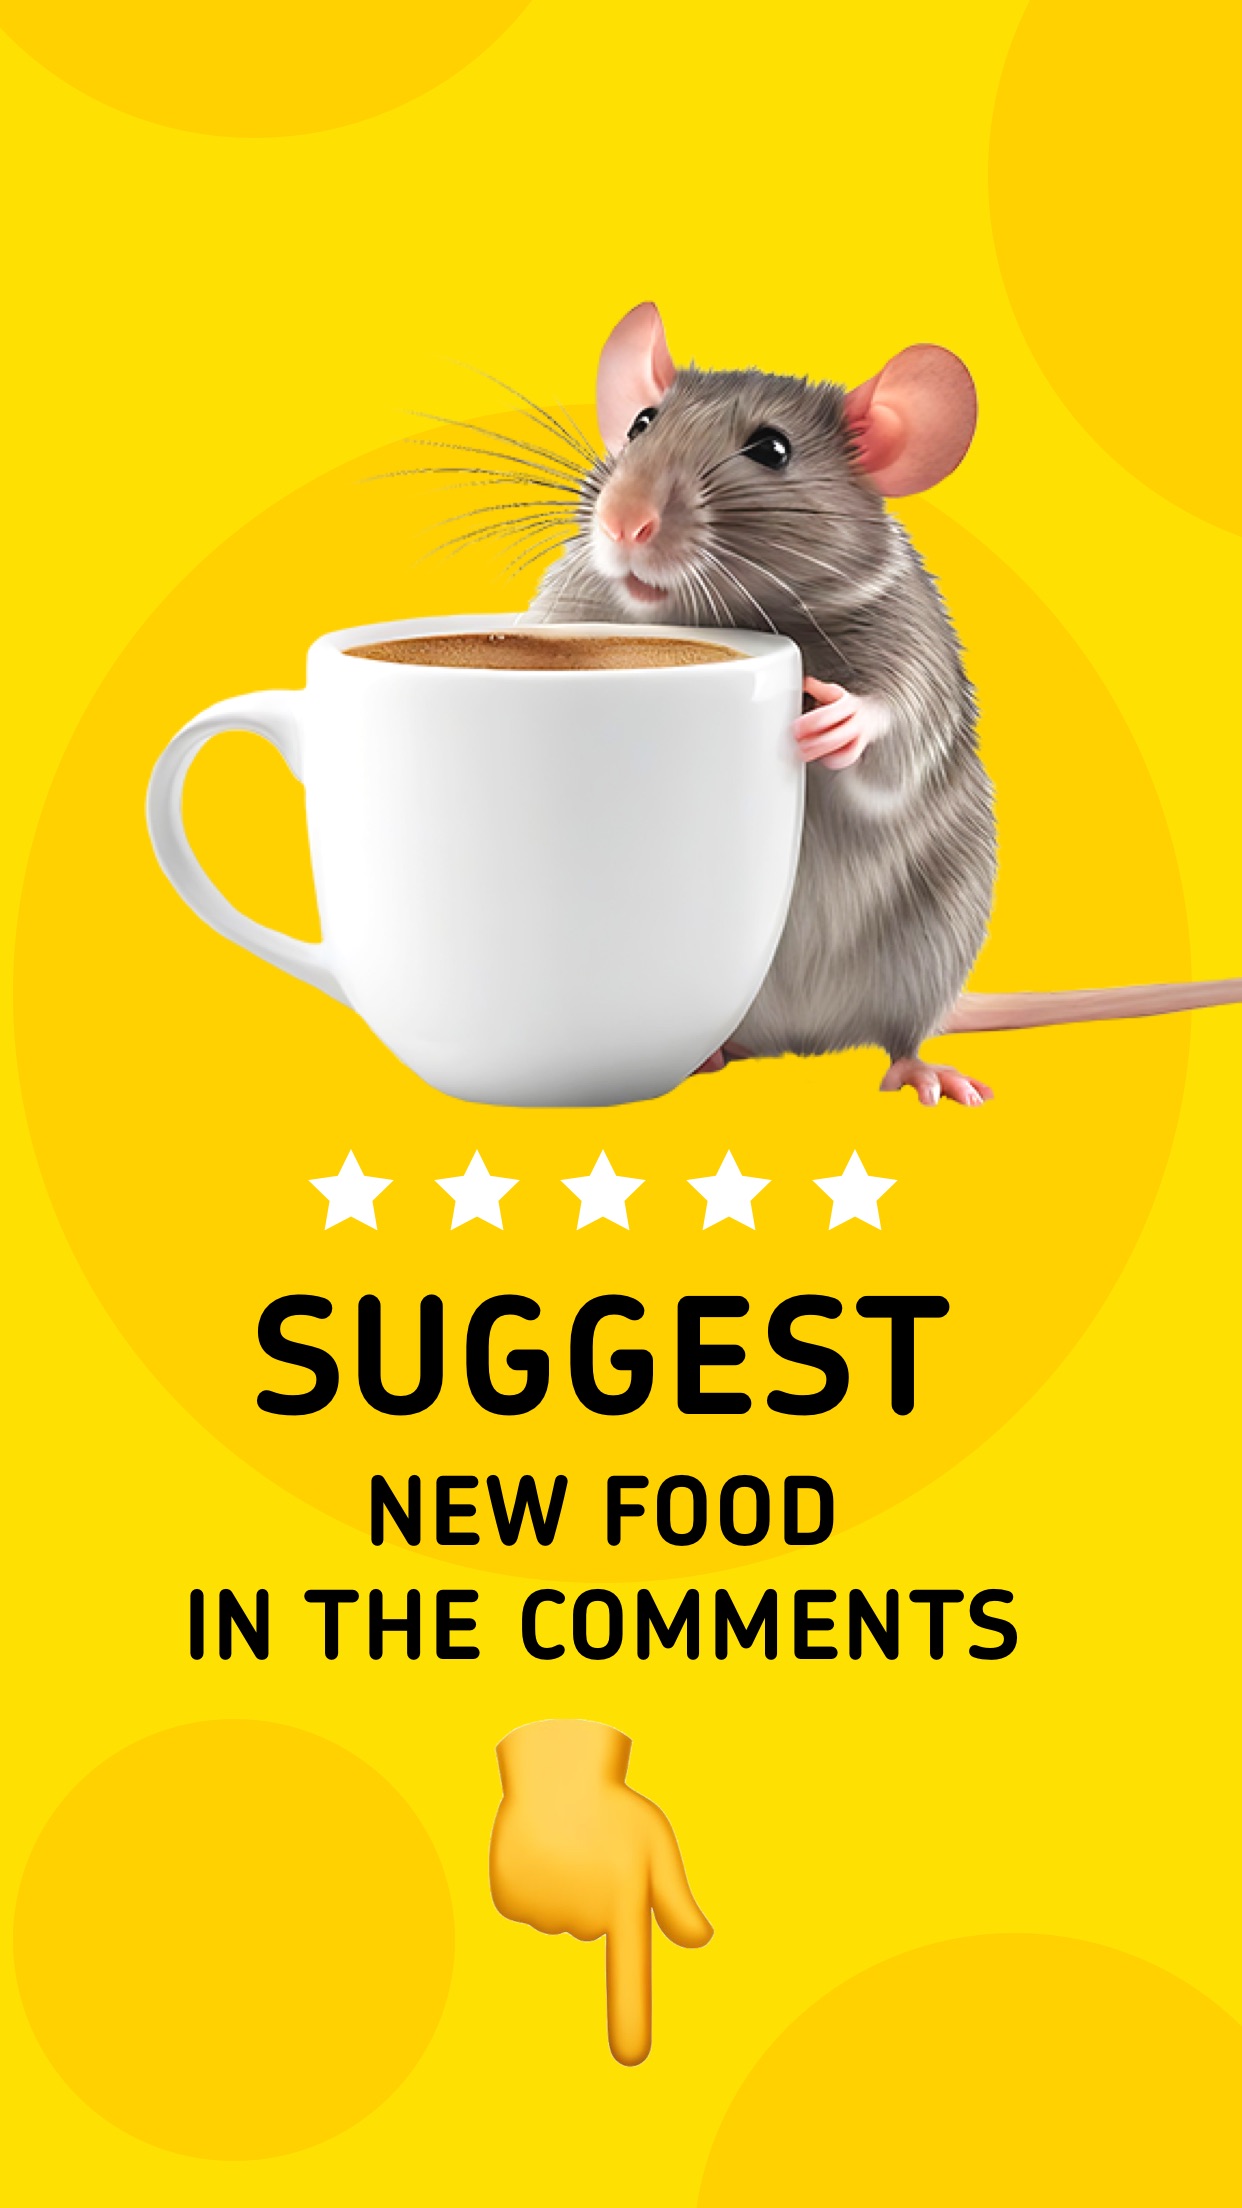 Screenshot do app Rat Stickers: Pizza, Burger...